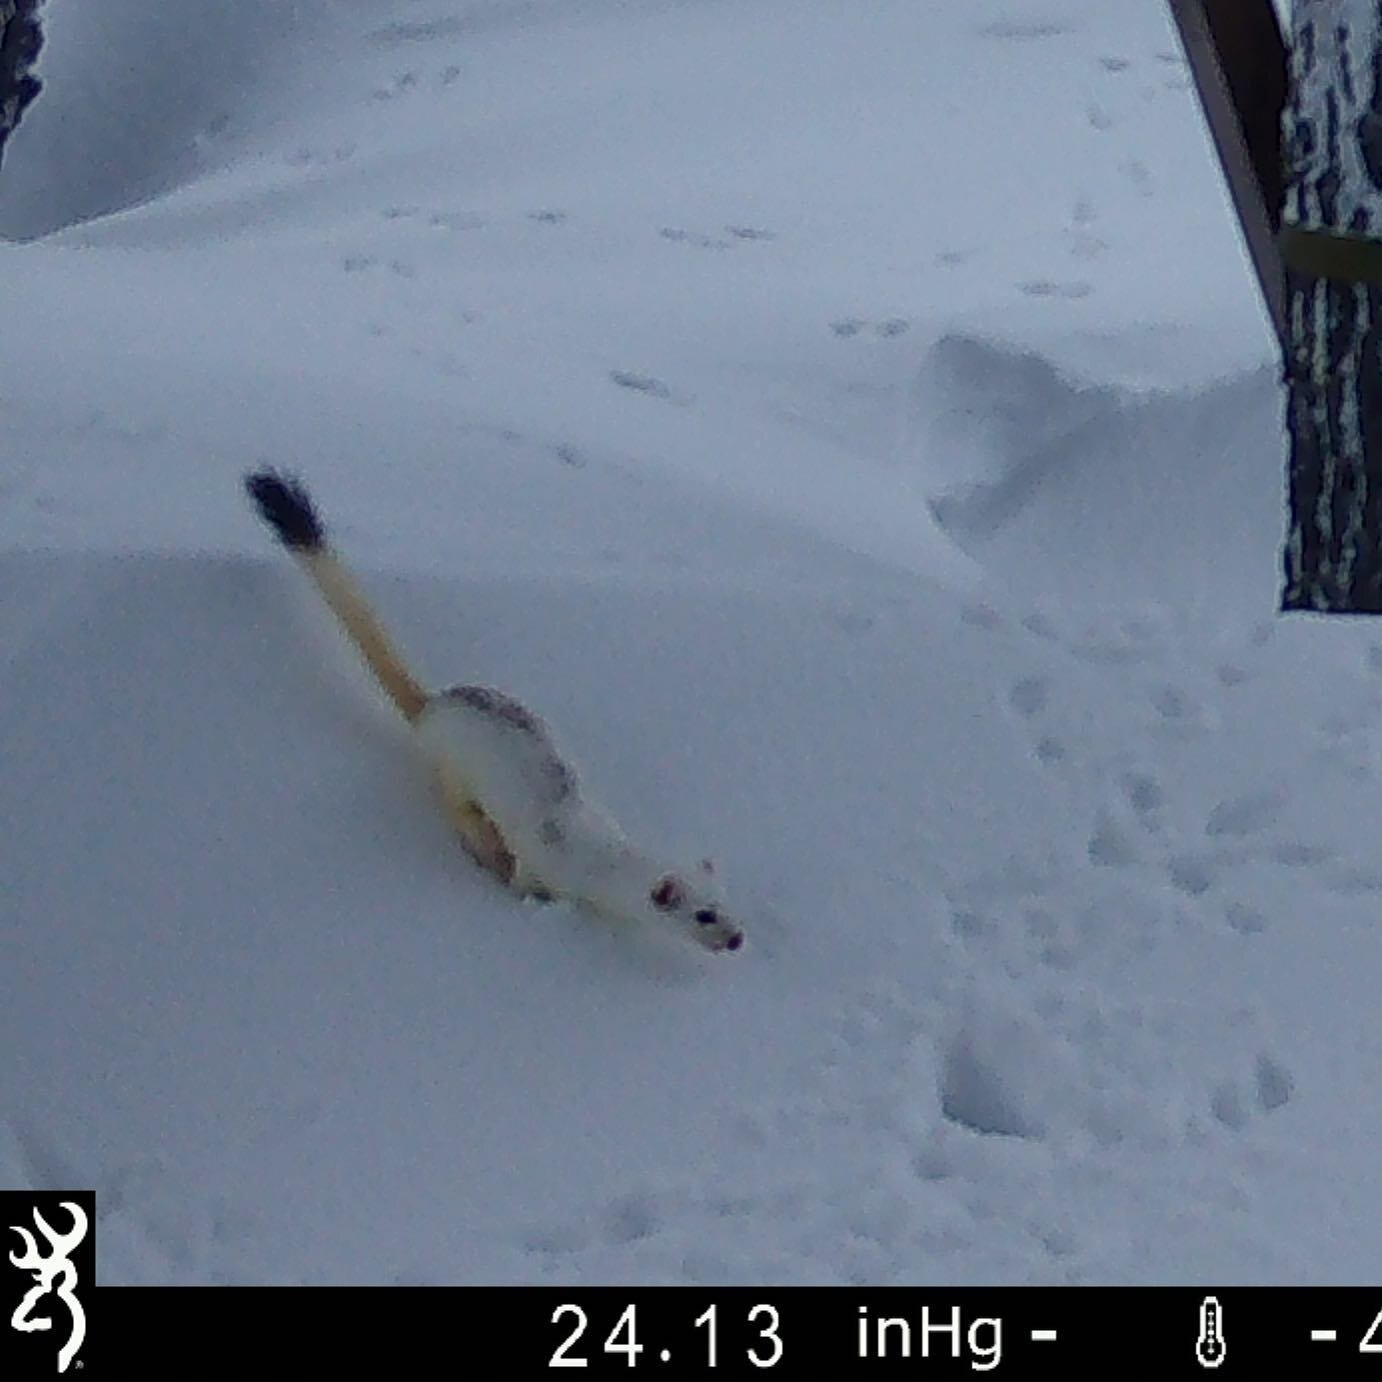 Long or short (ermine) -tailed weasel in the snow? #mustelafrenata #mustelaerminea